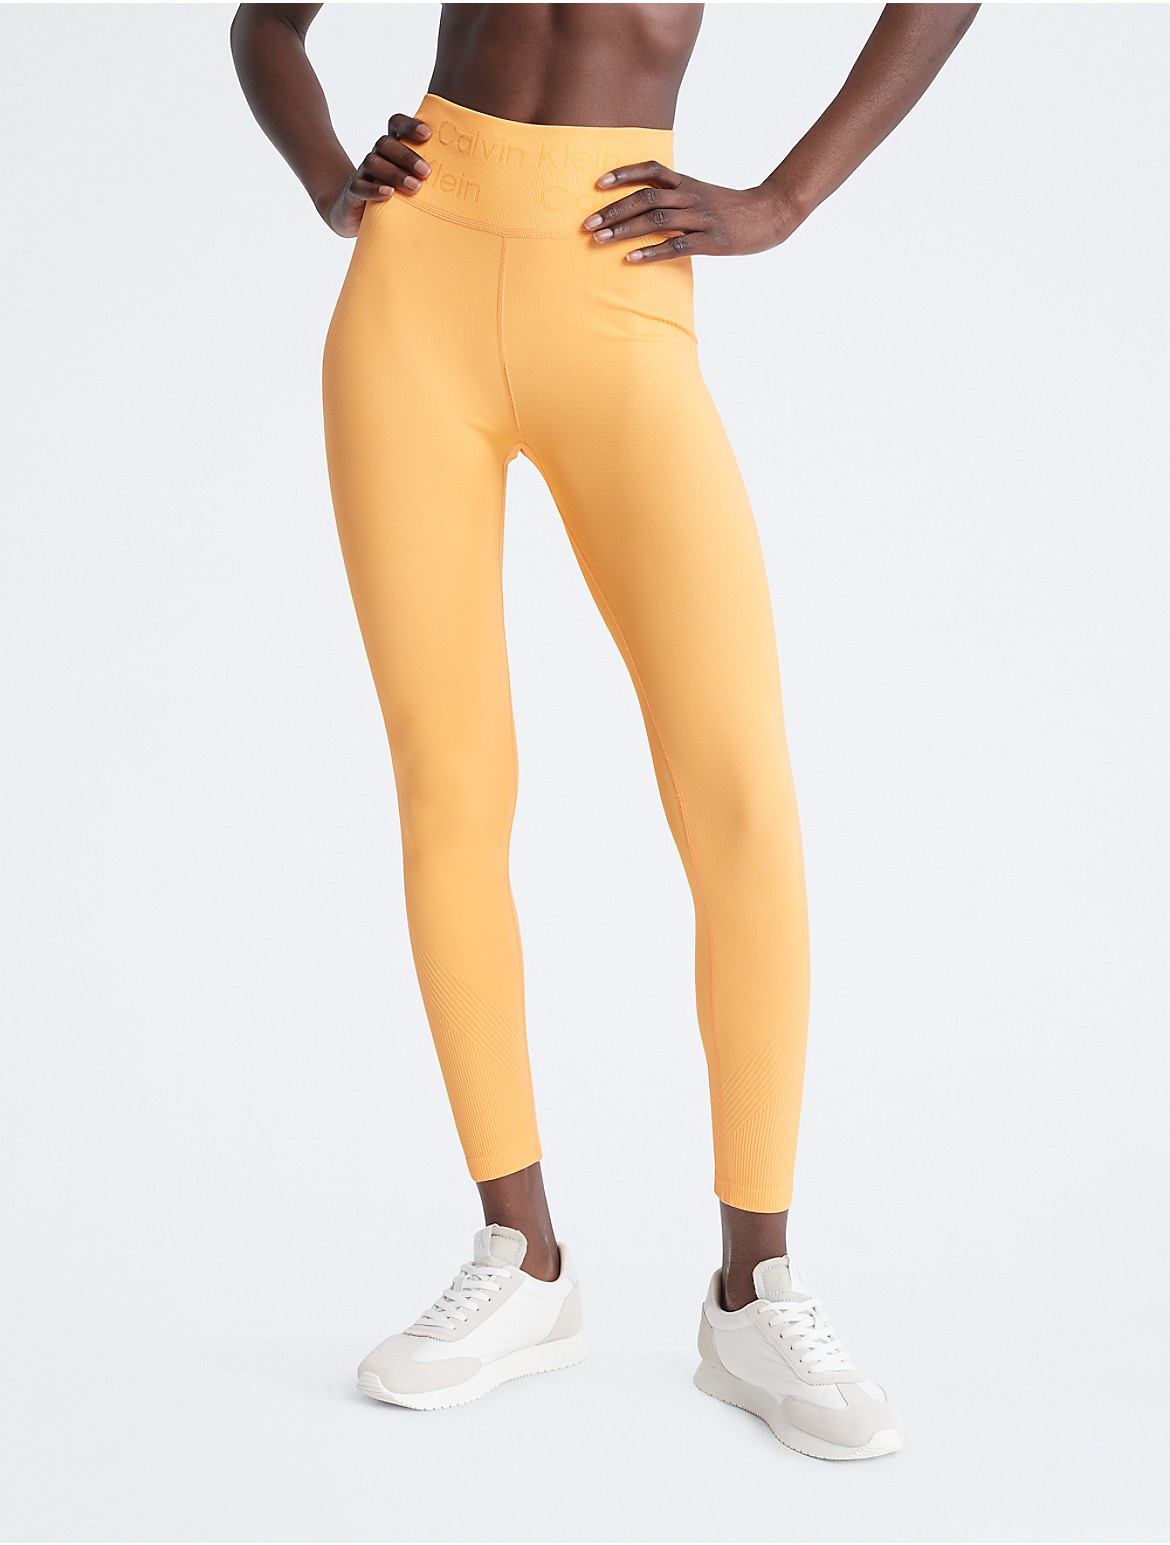 Calvin Klein Women's Performance Seamless 7/8 Leggings - Orange - XL